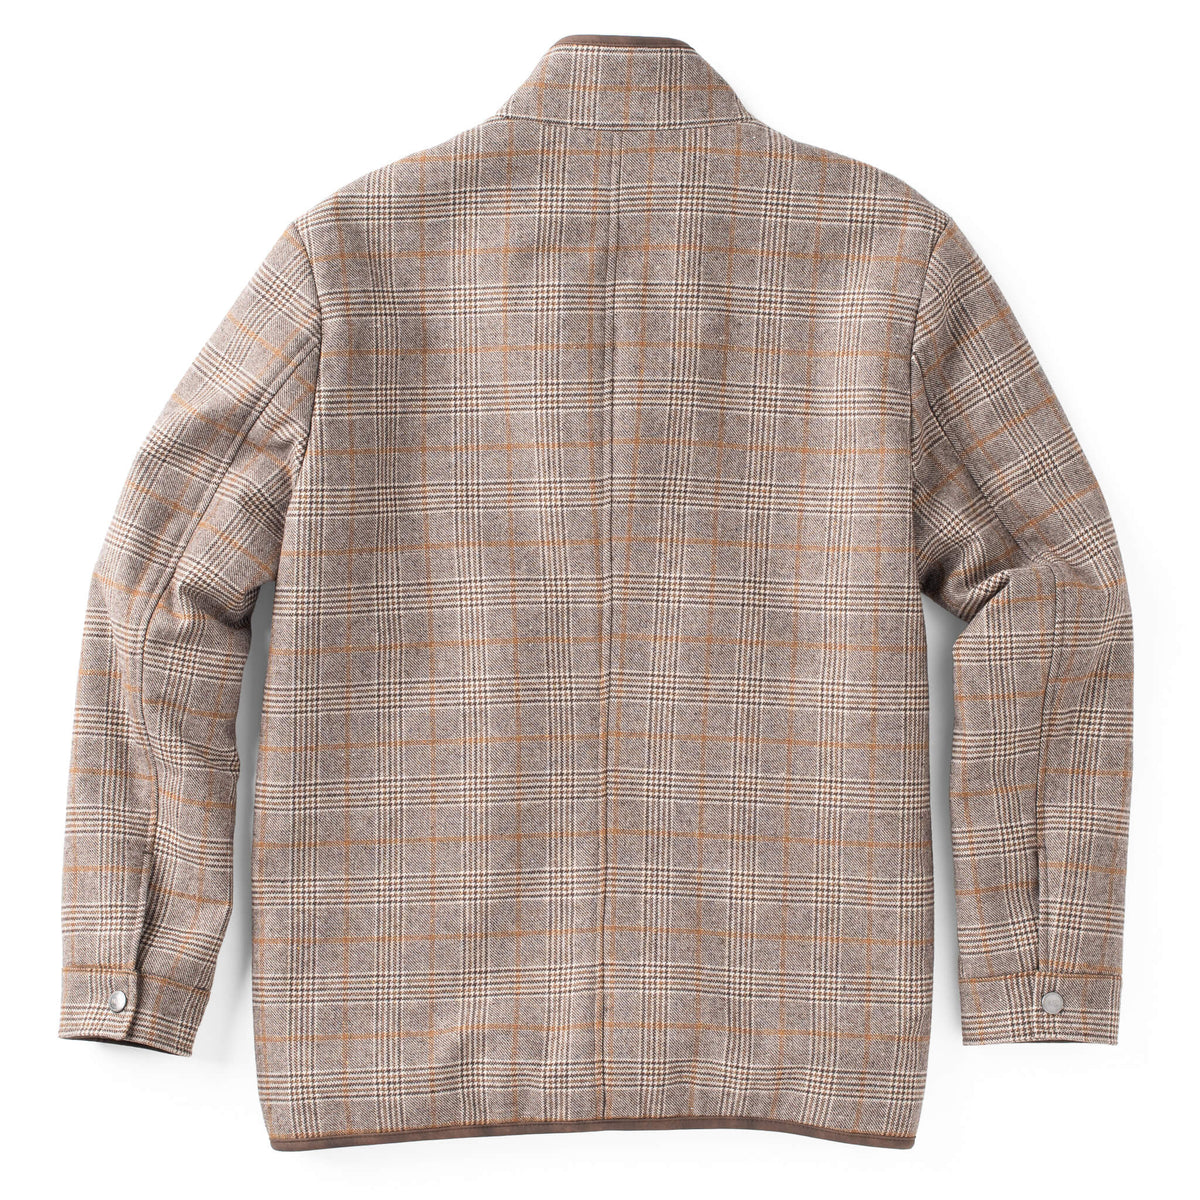 Grayson Wool Blend Shirt Jacket – Charcoal &amp; Tan Plaid